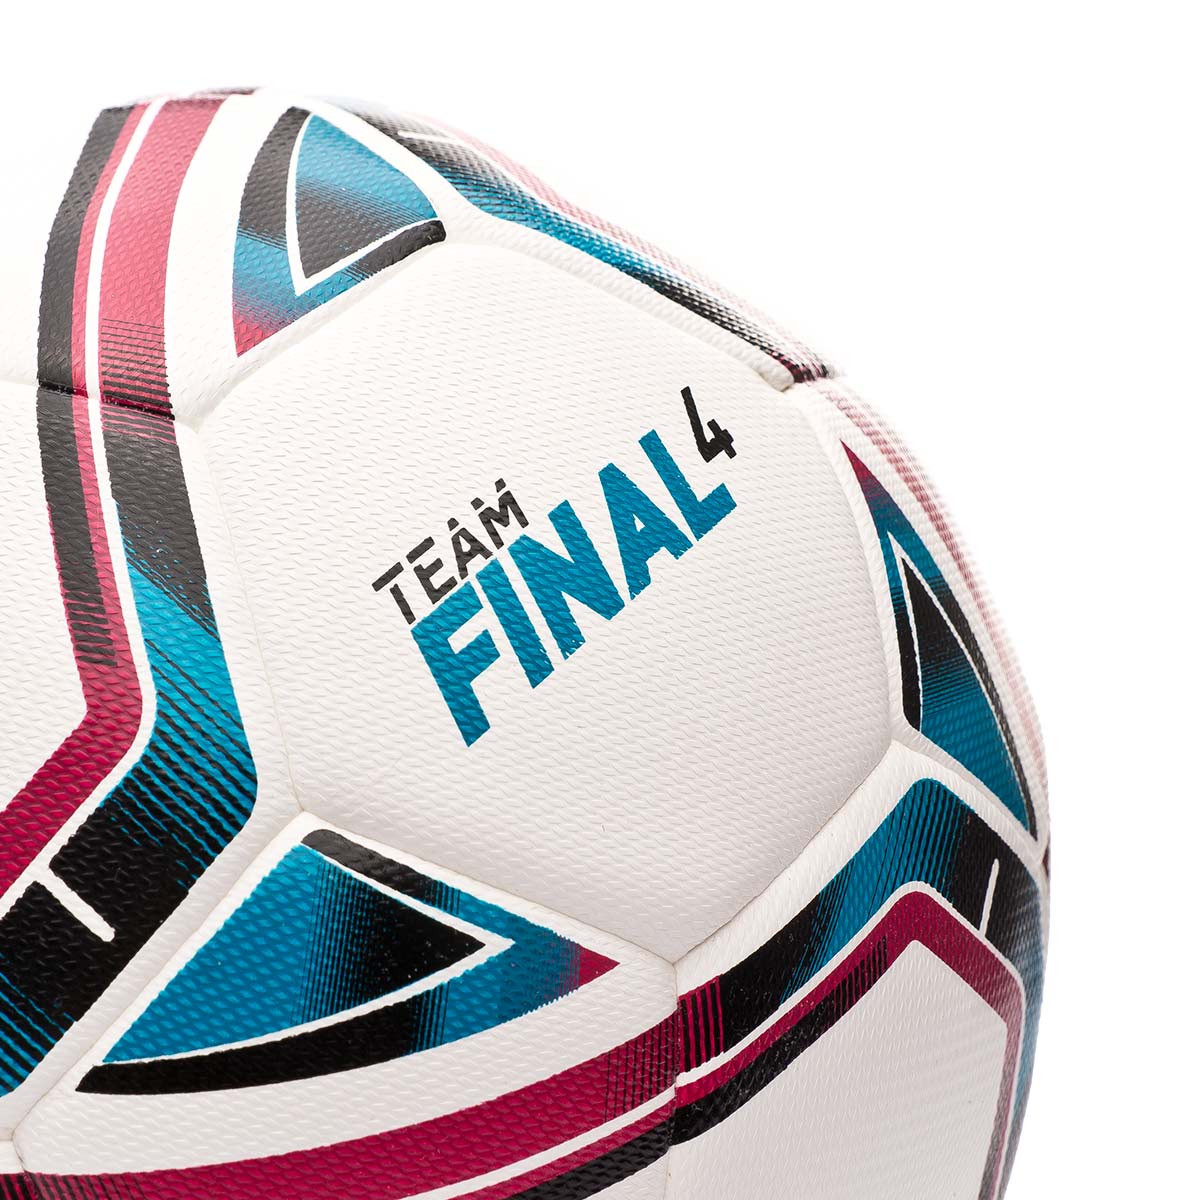 Puma TeamFINAL 21.4 IMS Hybrid Ball